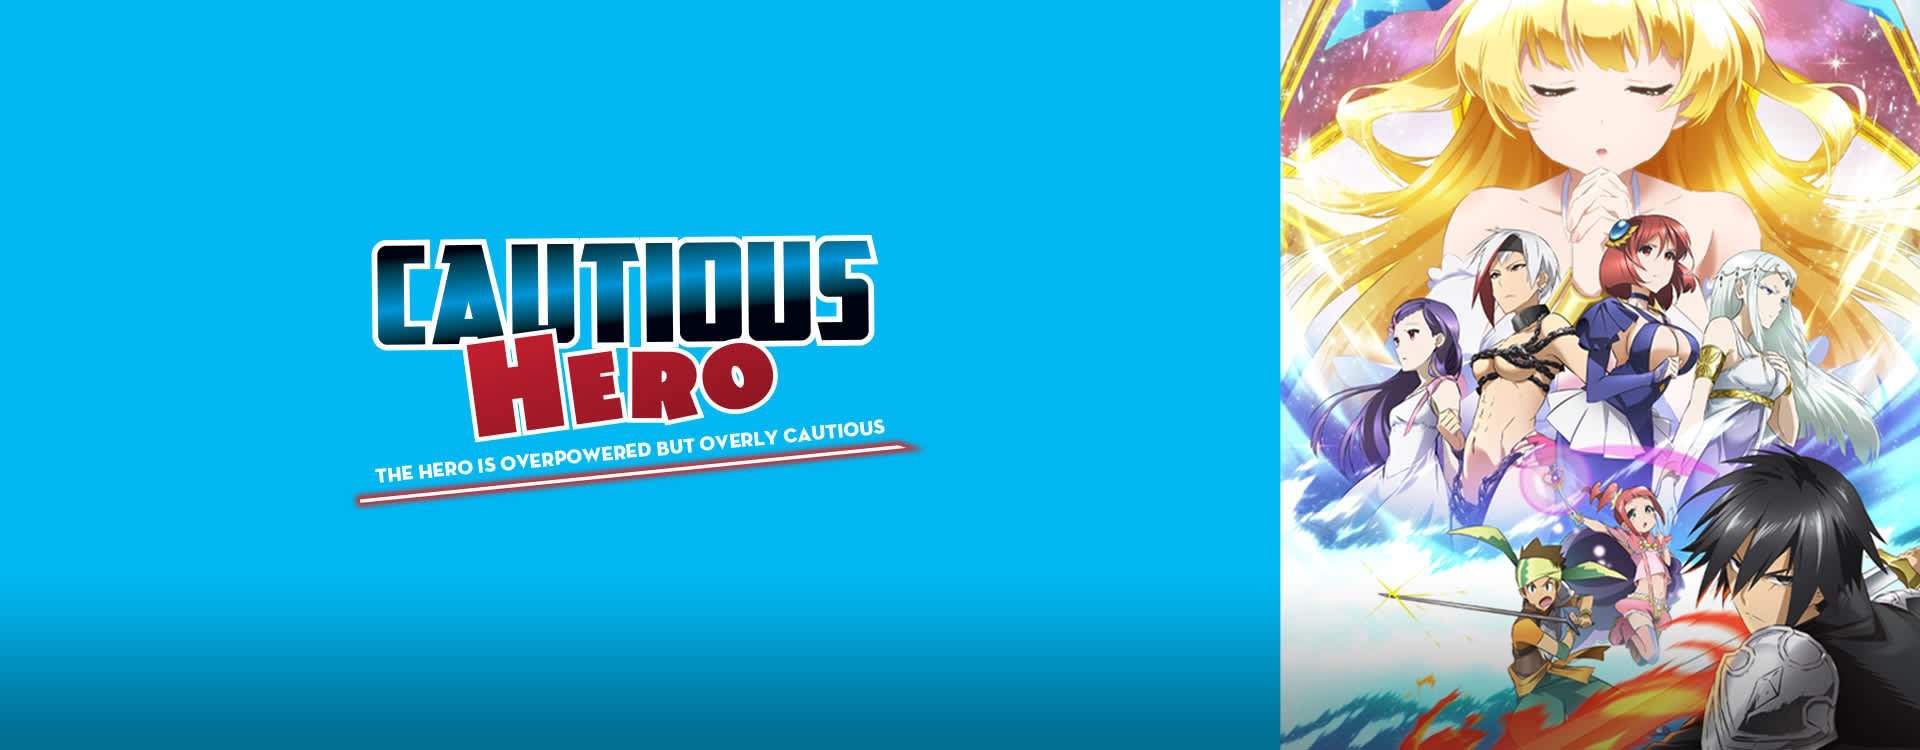 Cautious Hero First Impression Anime Amino